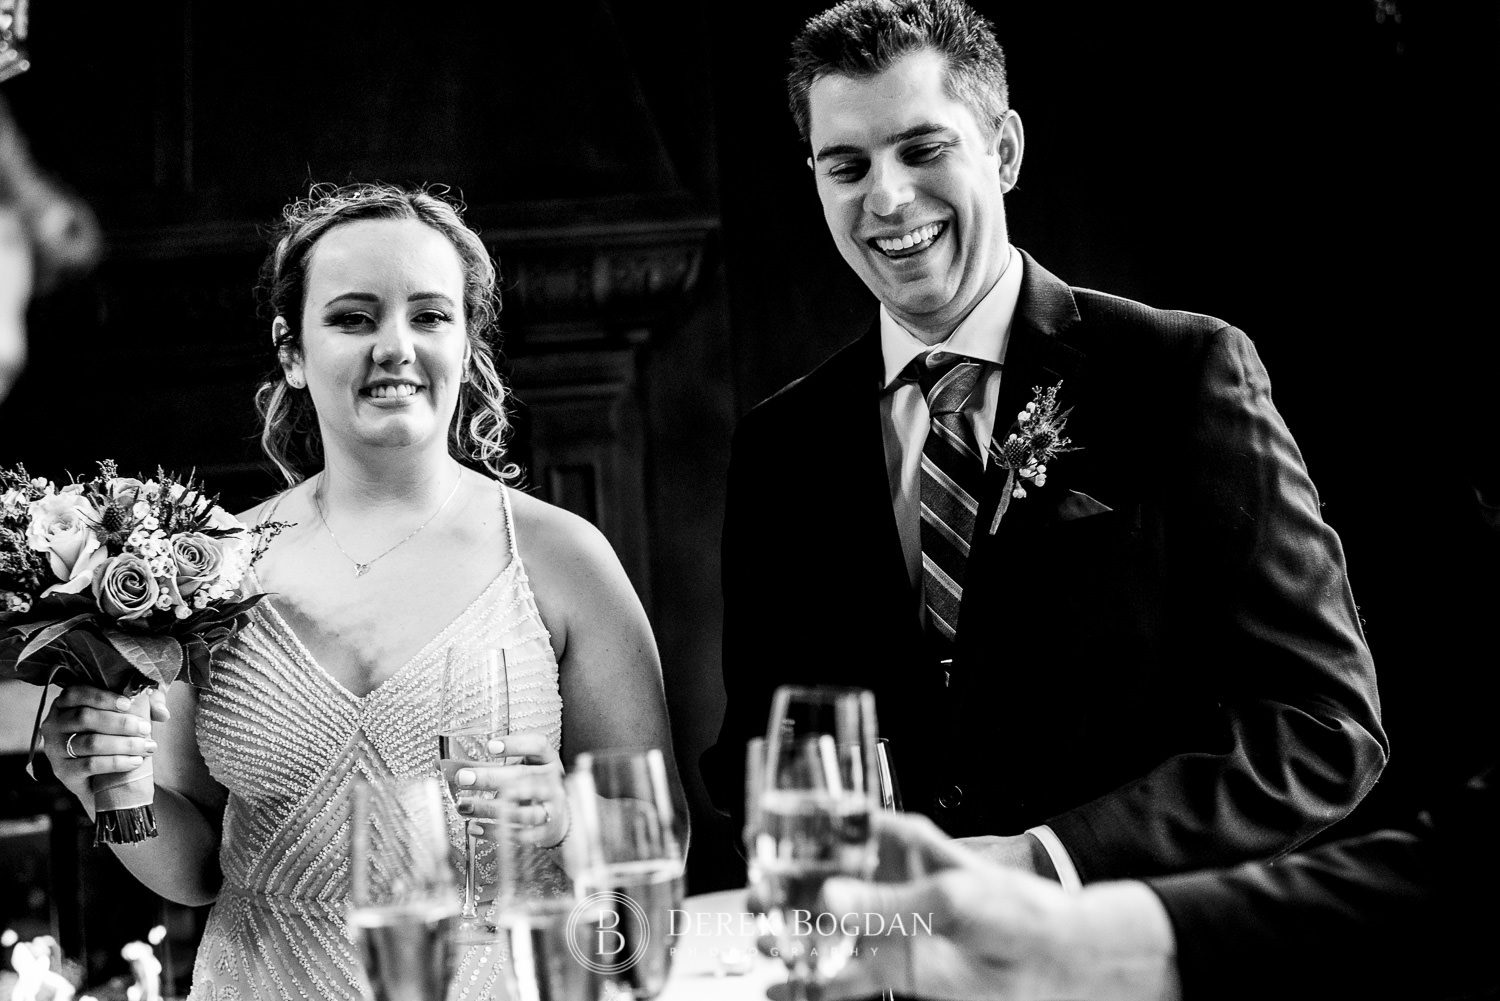 Manitoba Club Wedding Ceremony champagne toast bride and groom smiles